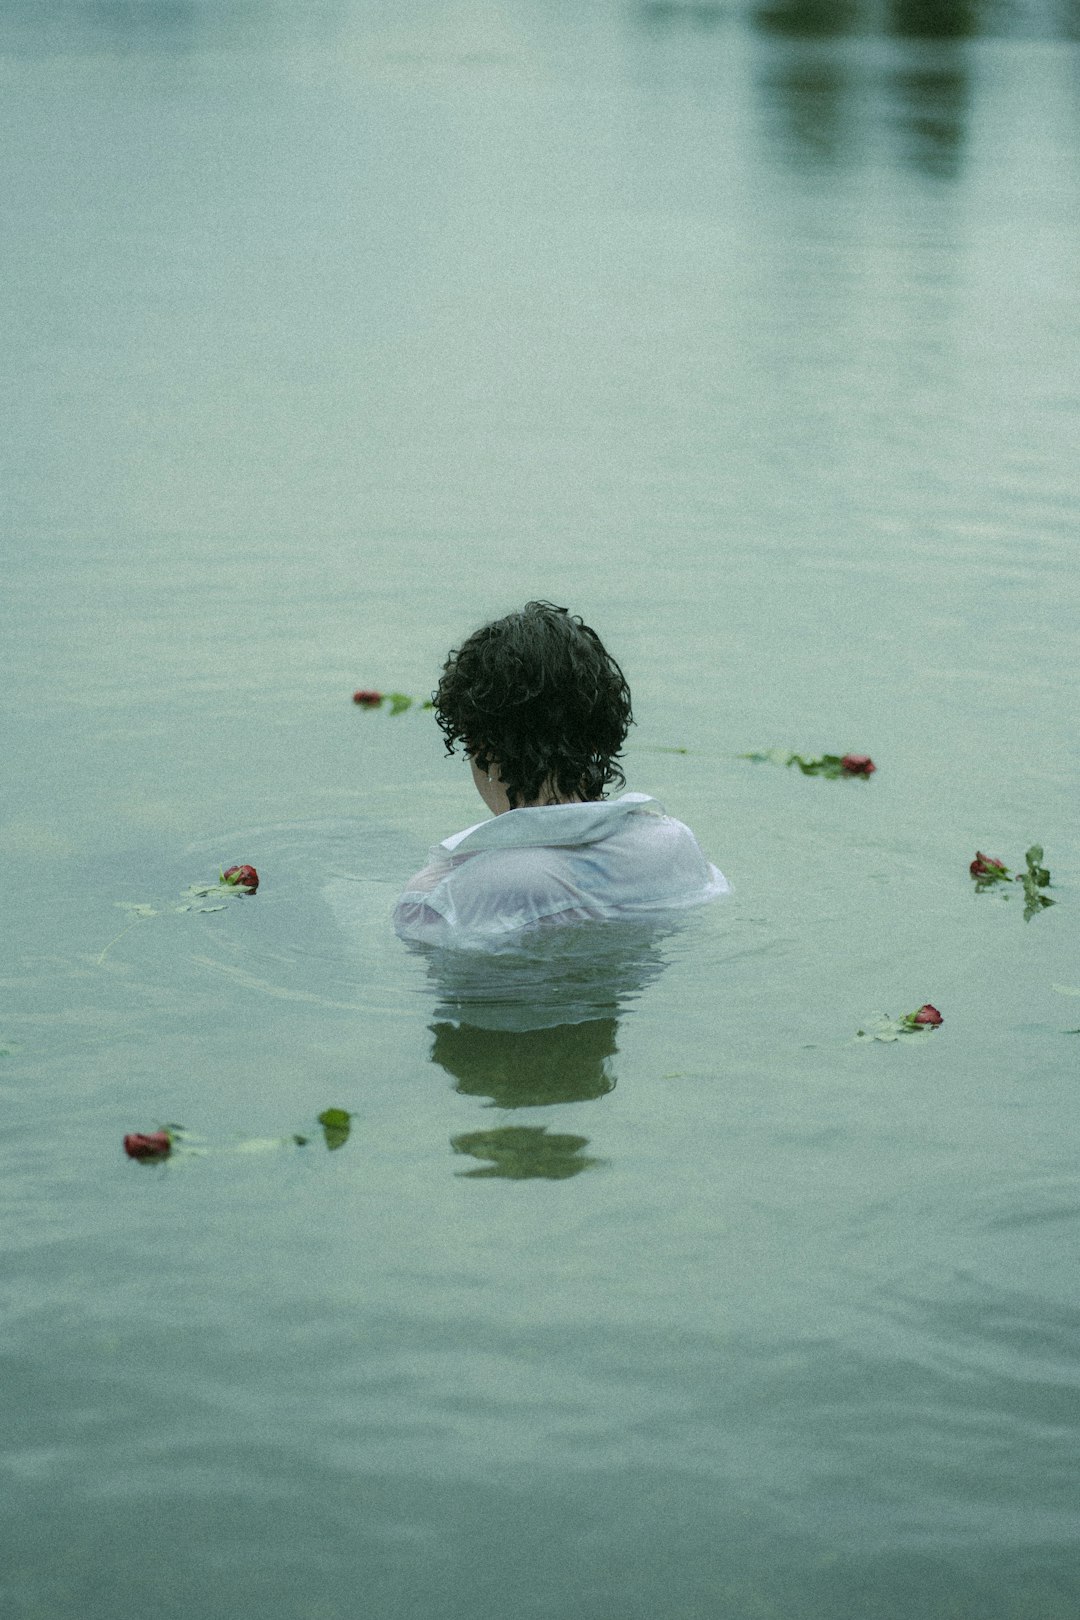 man in white shirt on water during daytime